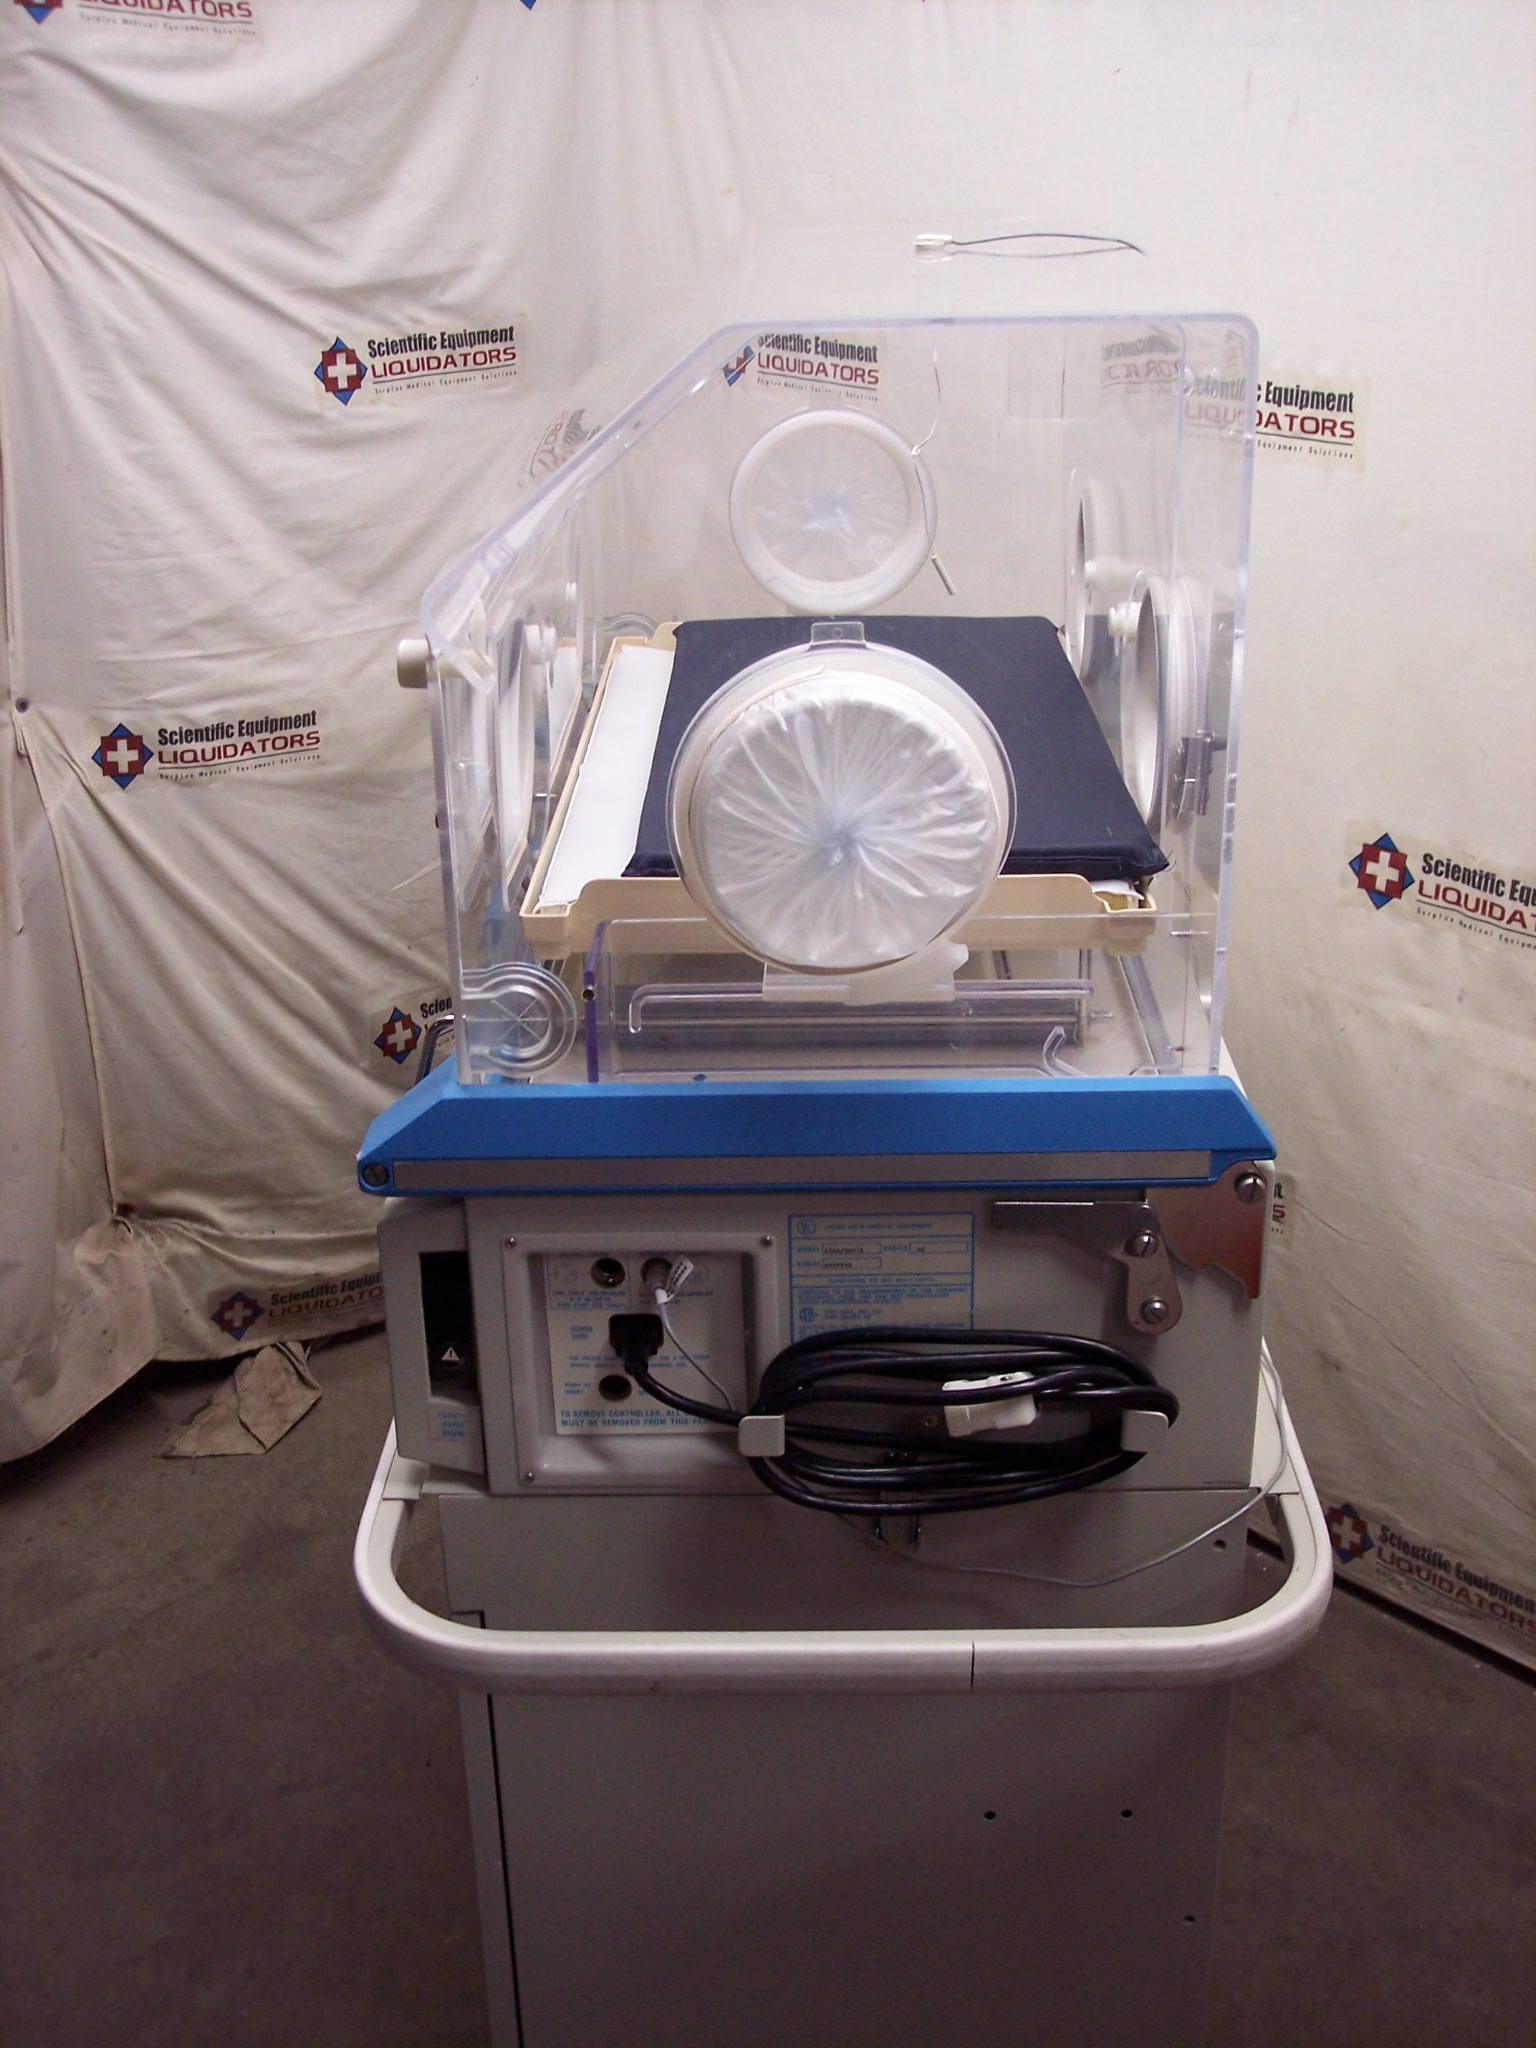 Airshields C100/200-2 Infant Incubator